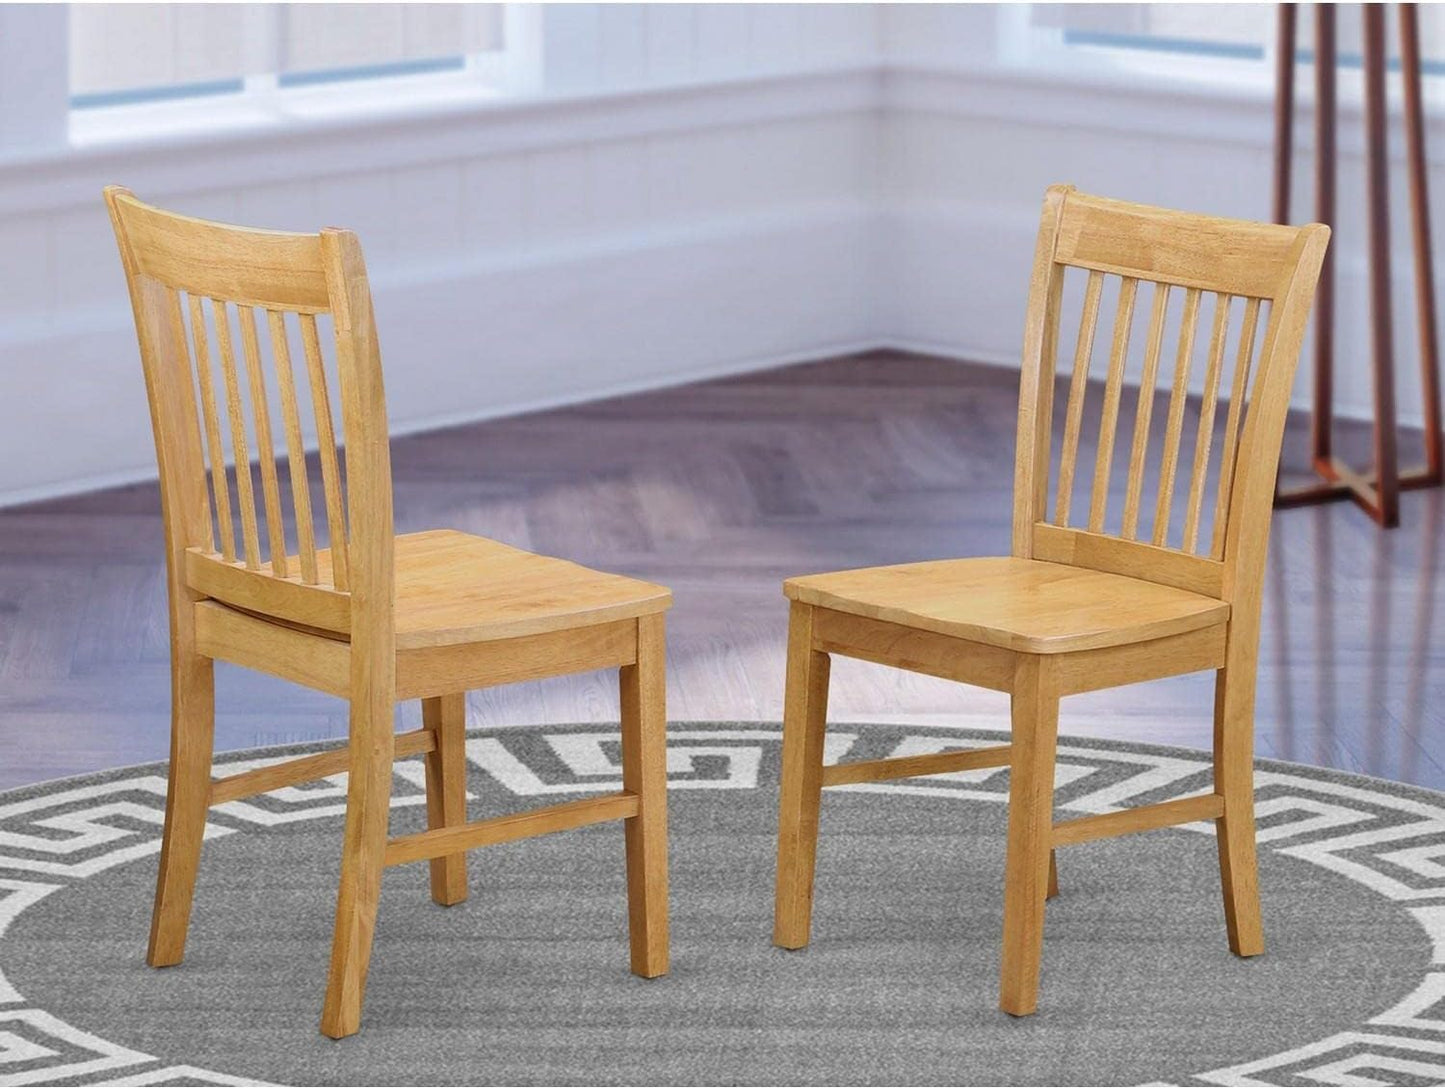 East West Furniture Norfolk Dining Slat Back Wooden Seat Chairs, Set of 2, Oak